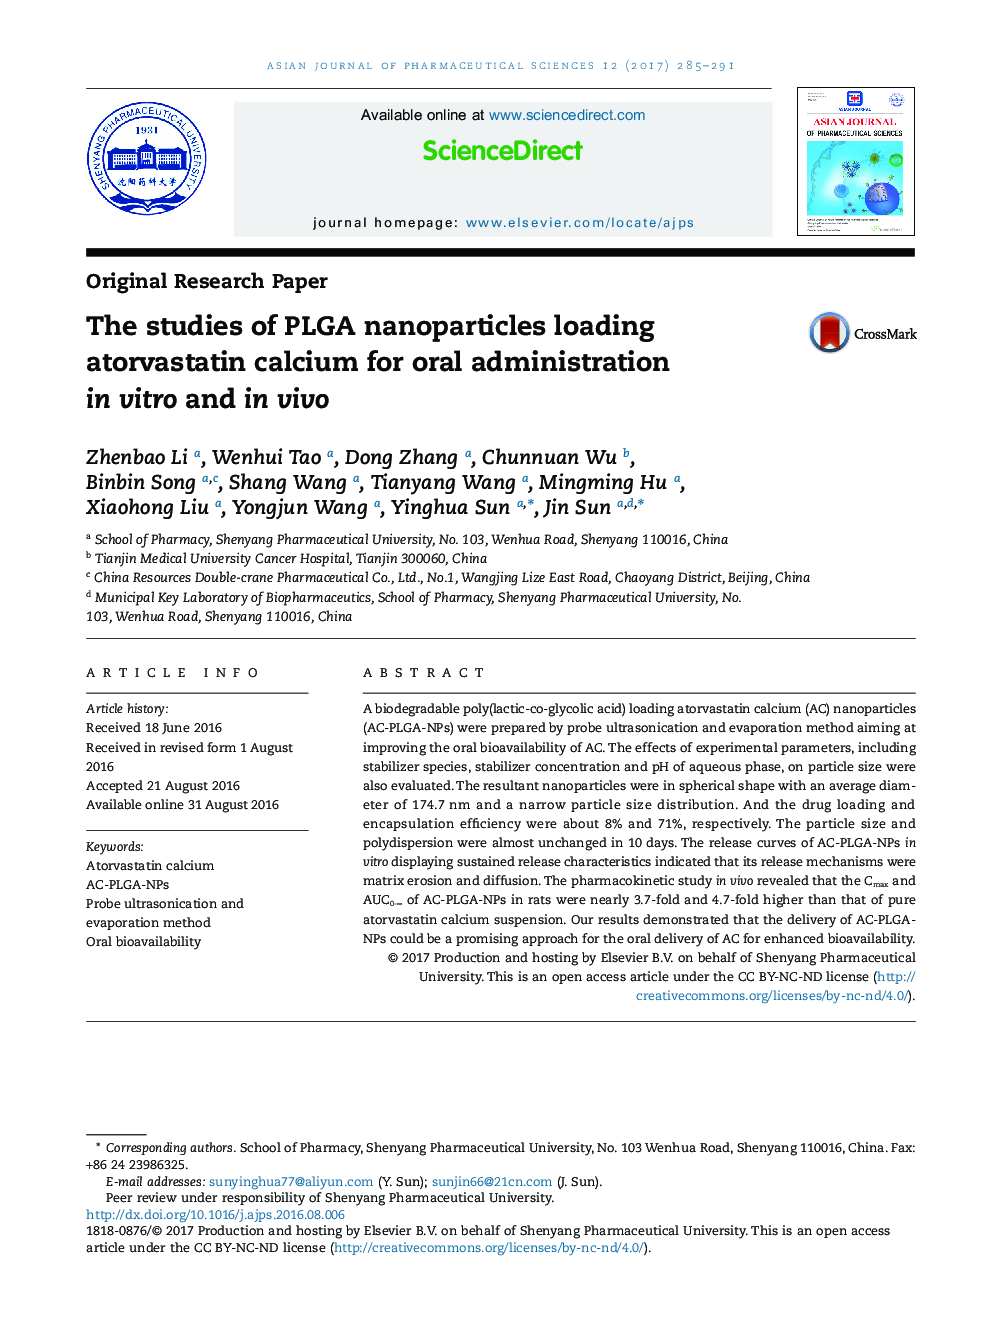 The studies of PLGA nanoparticles loading atorvastatin calcium for oral administration in vitro and in vivo